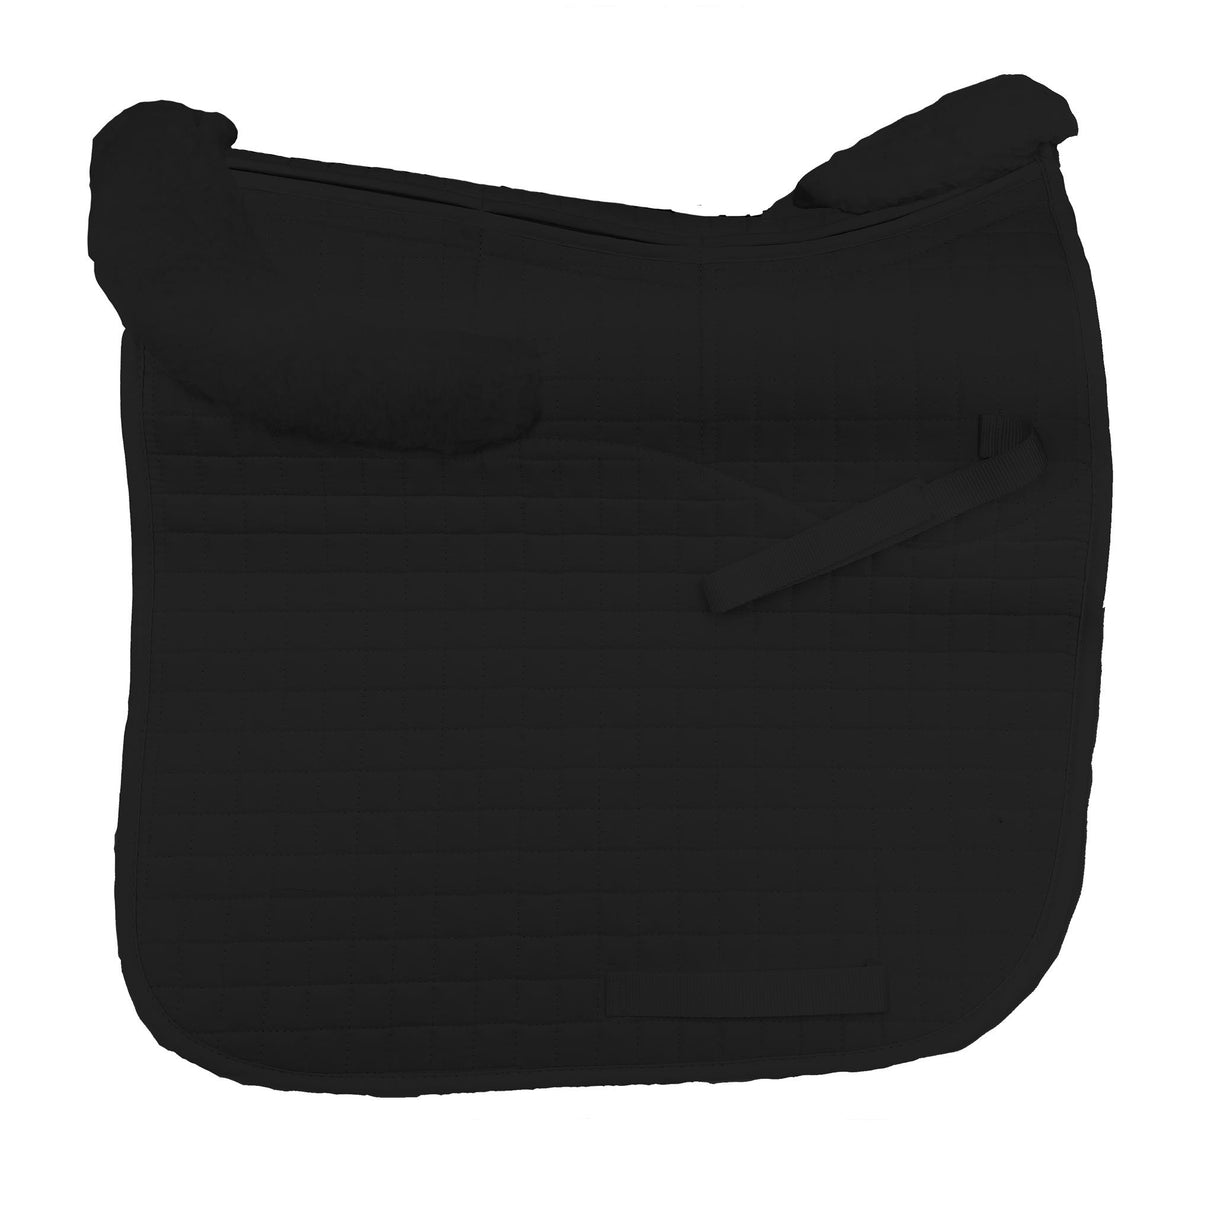 Majyk Equipe Dressage Pad Correction with Impact Shims Black/Black Merino Wool